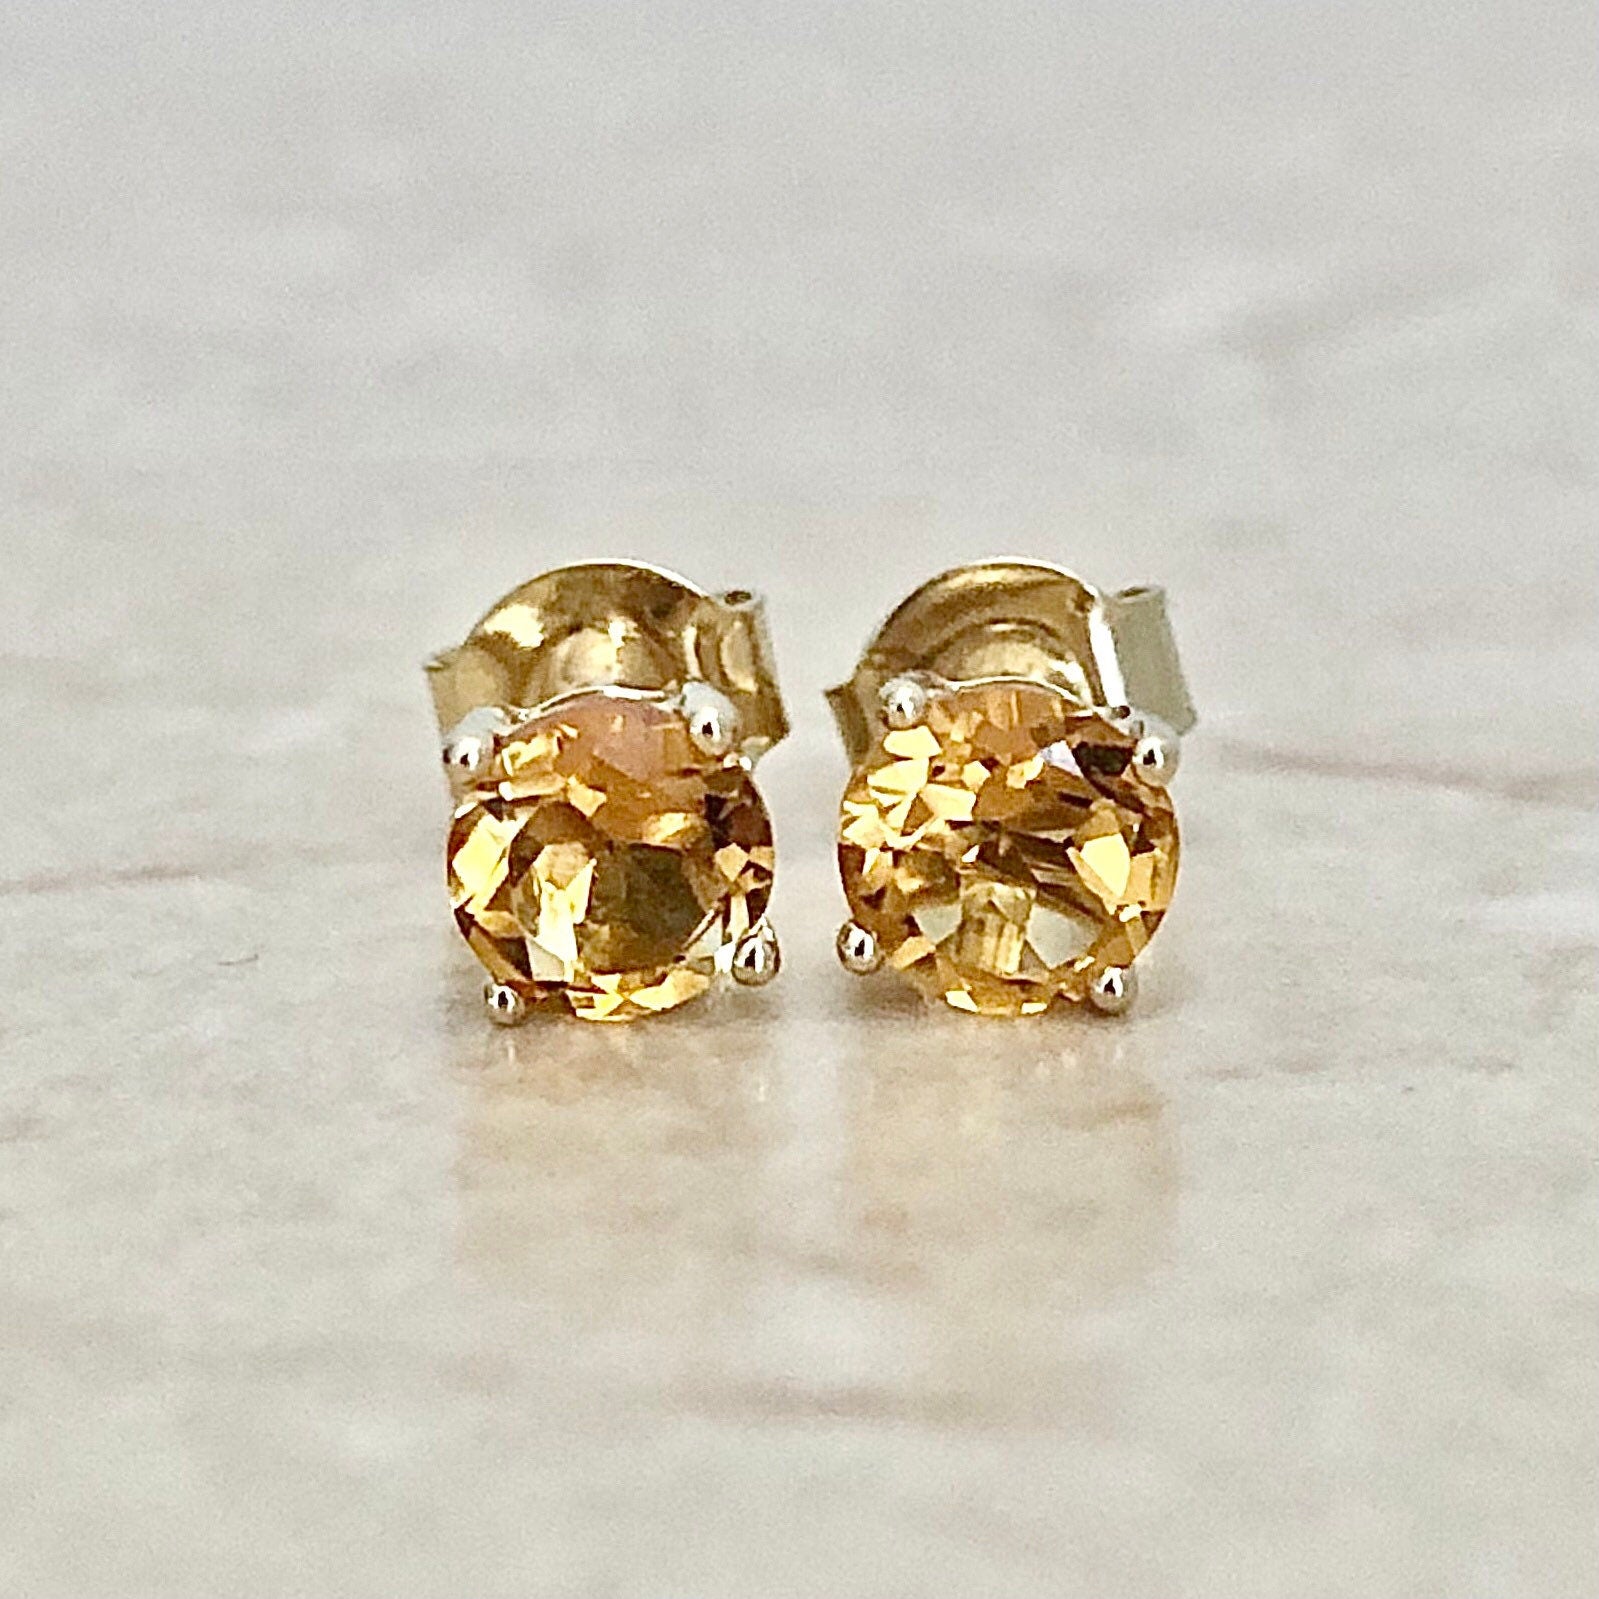 Round Citrine Stud Earrings - 14 Karat Yellow Gold - November Birthstone - Genuine Gemstone - Push Backs - Birthday Gift